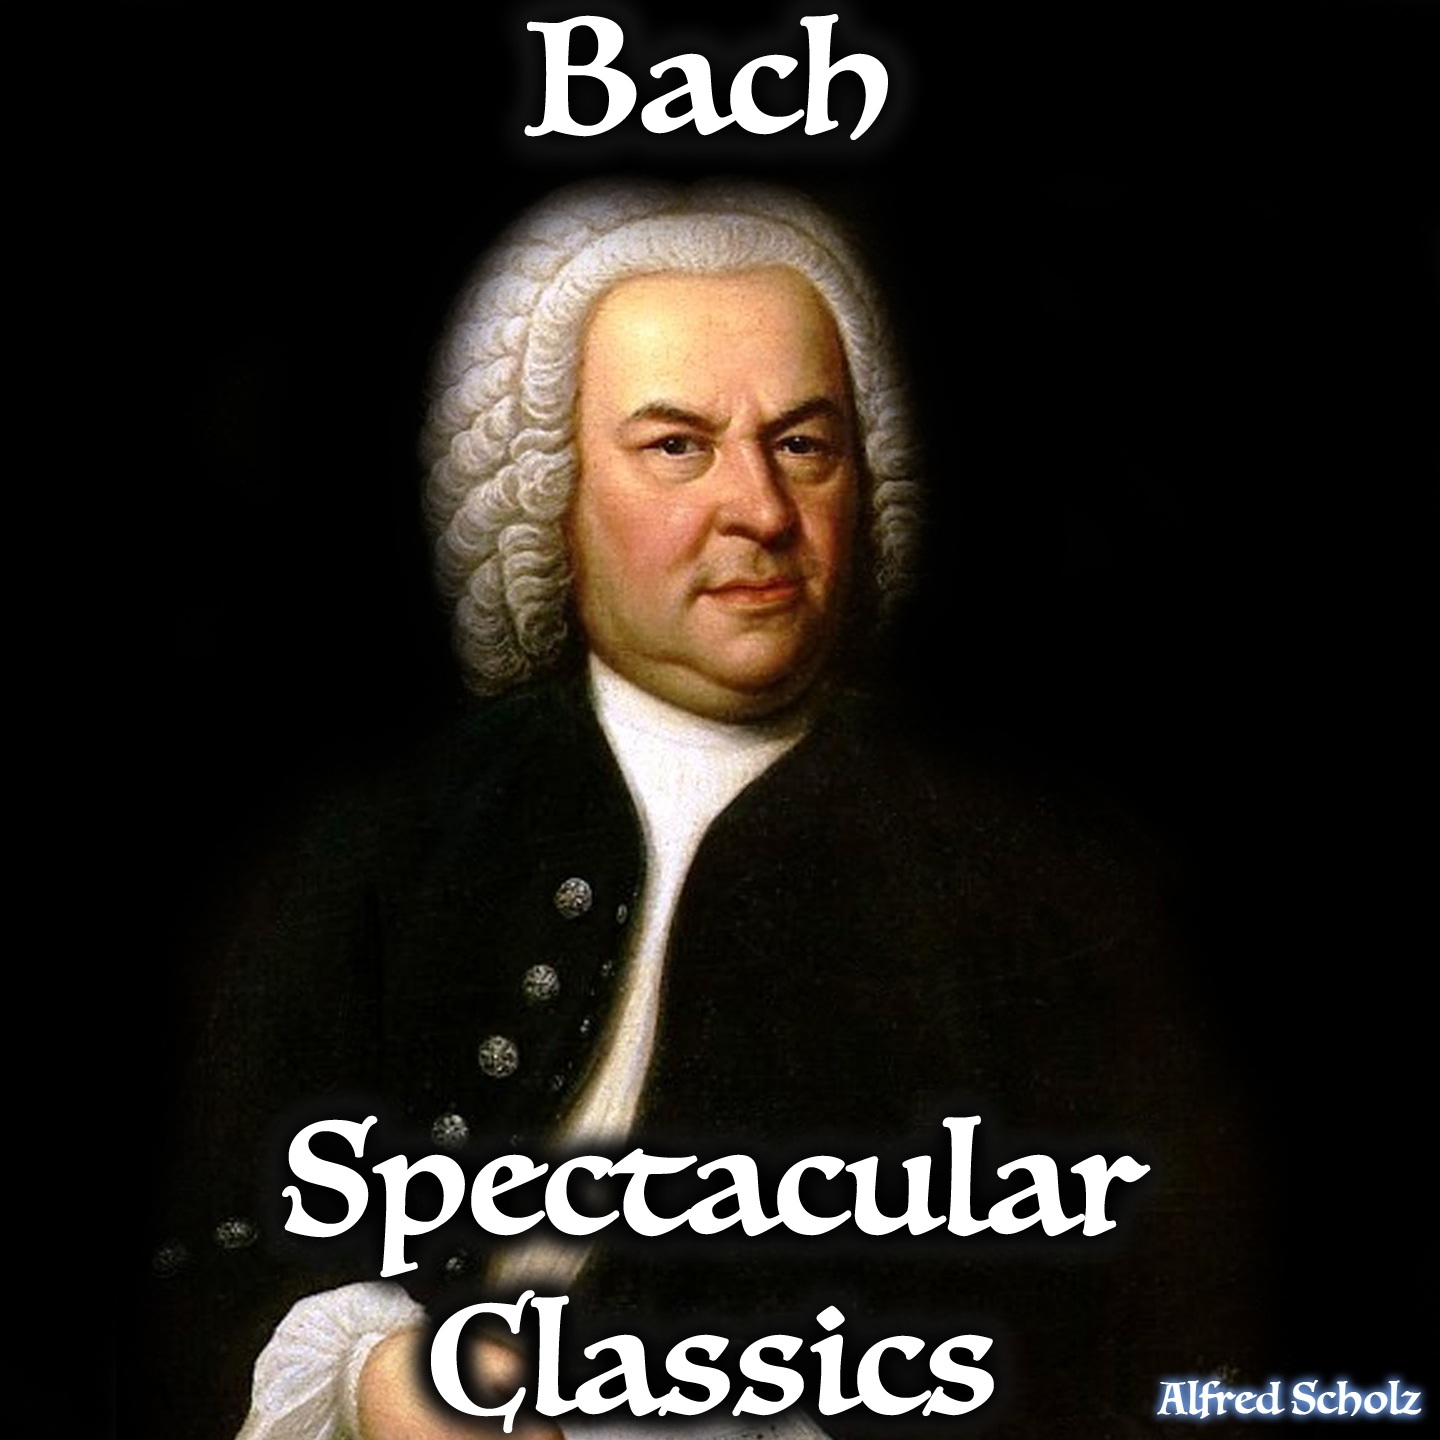 Bach, Spectacular Classic